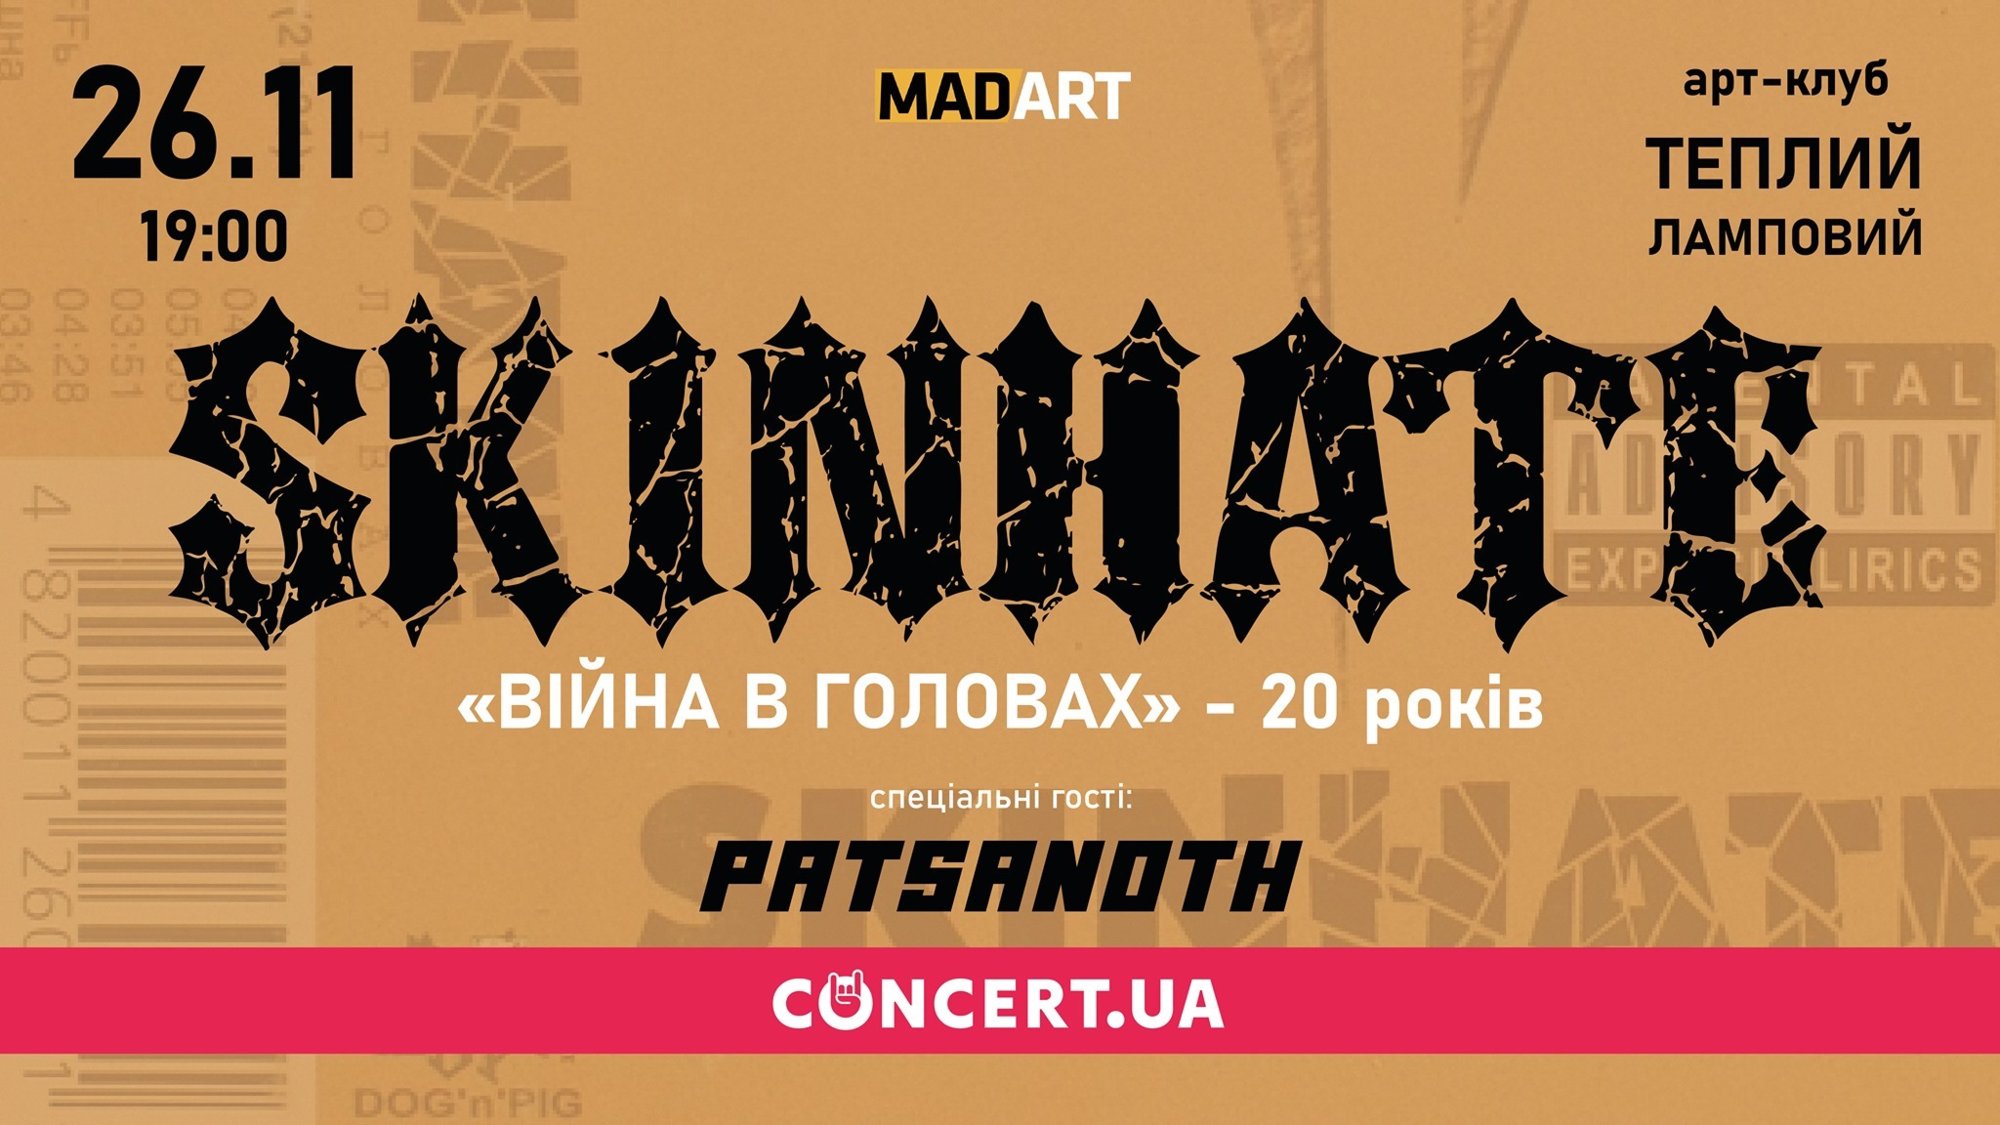 Skinhate/https://concert.ua/